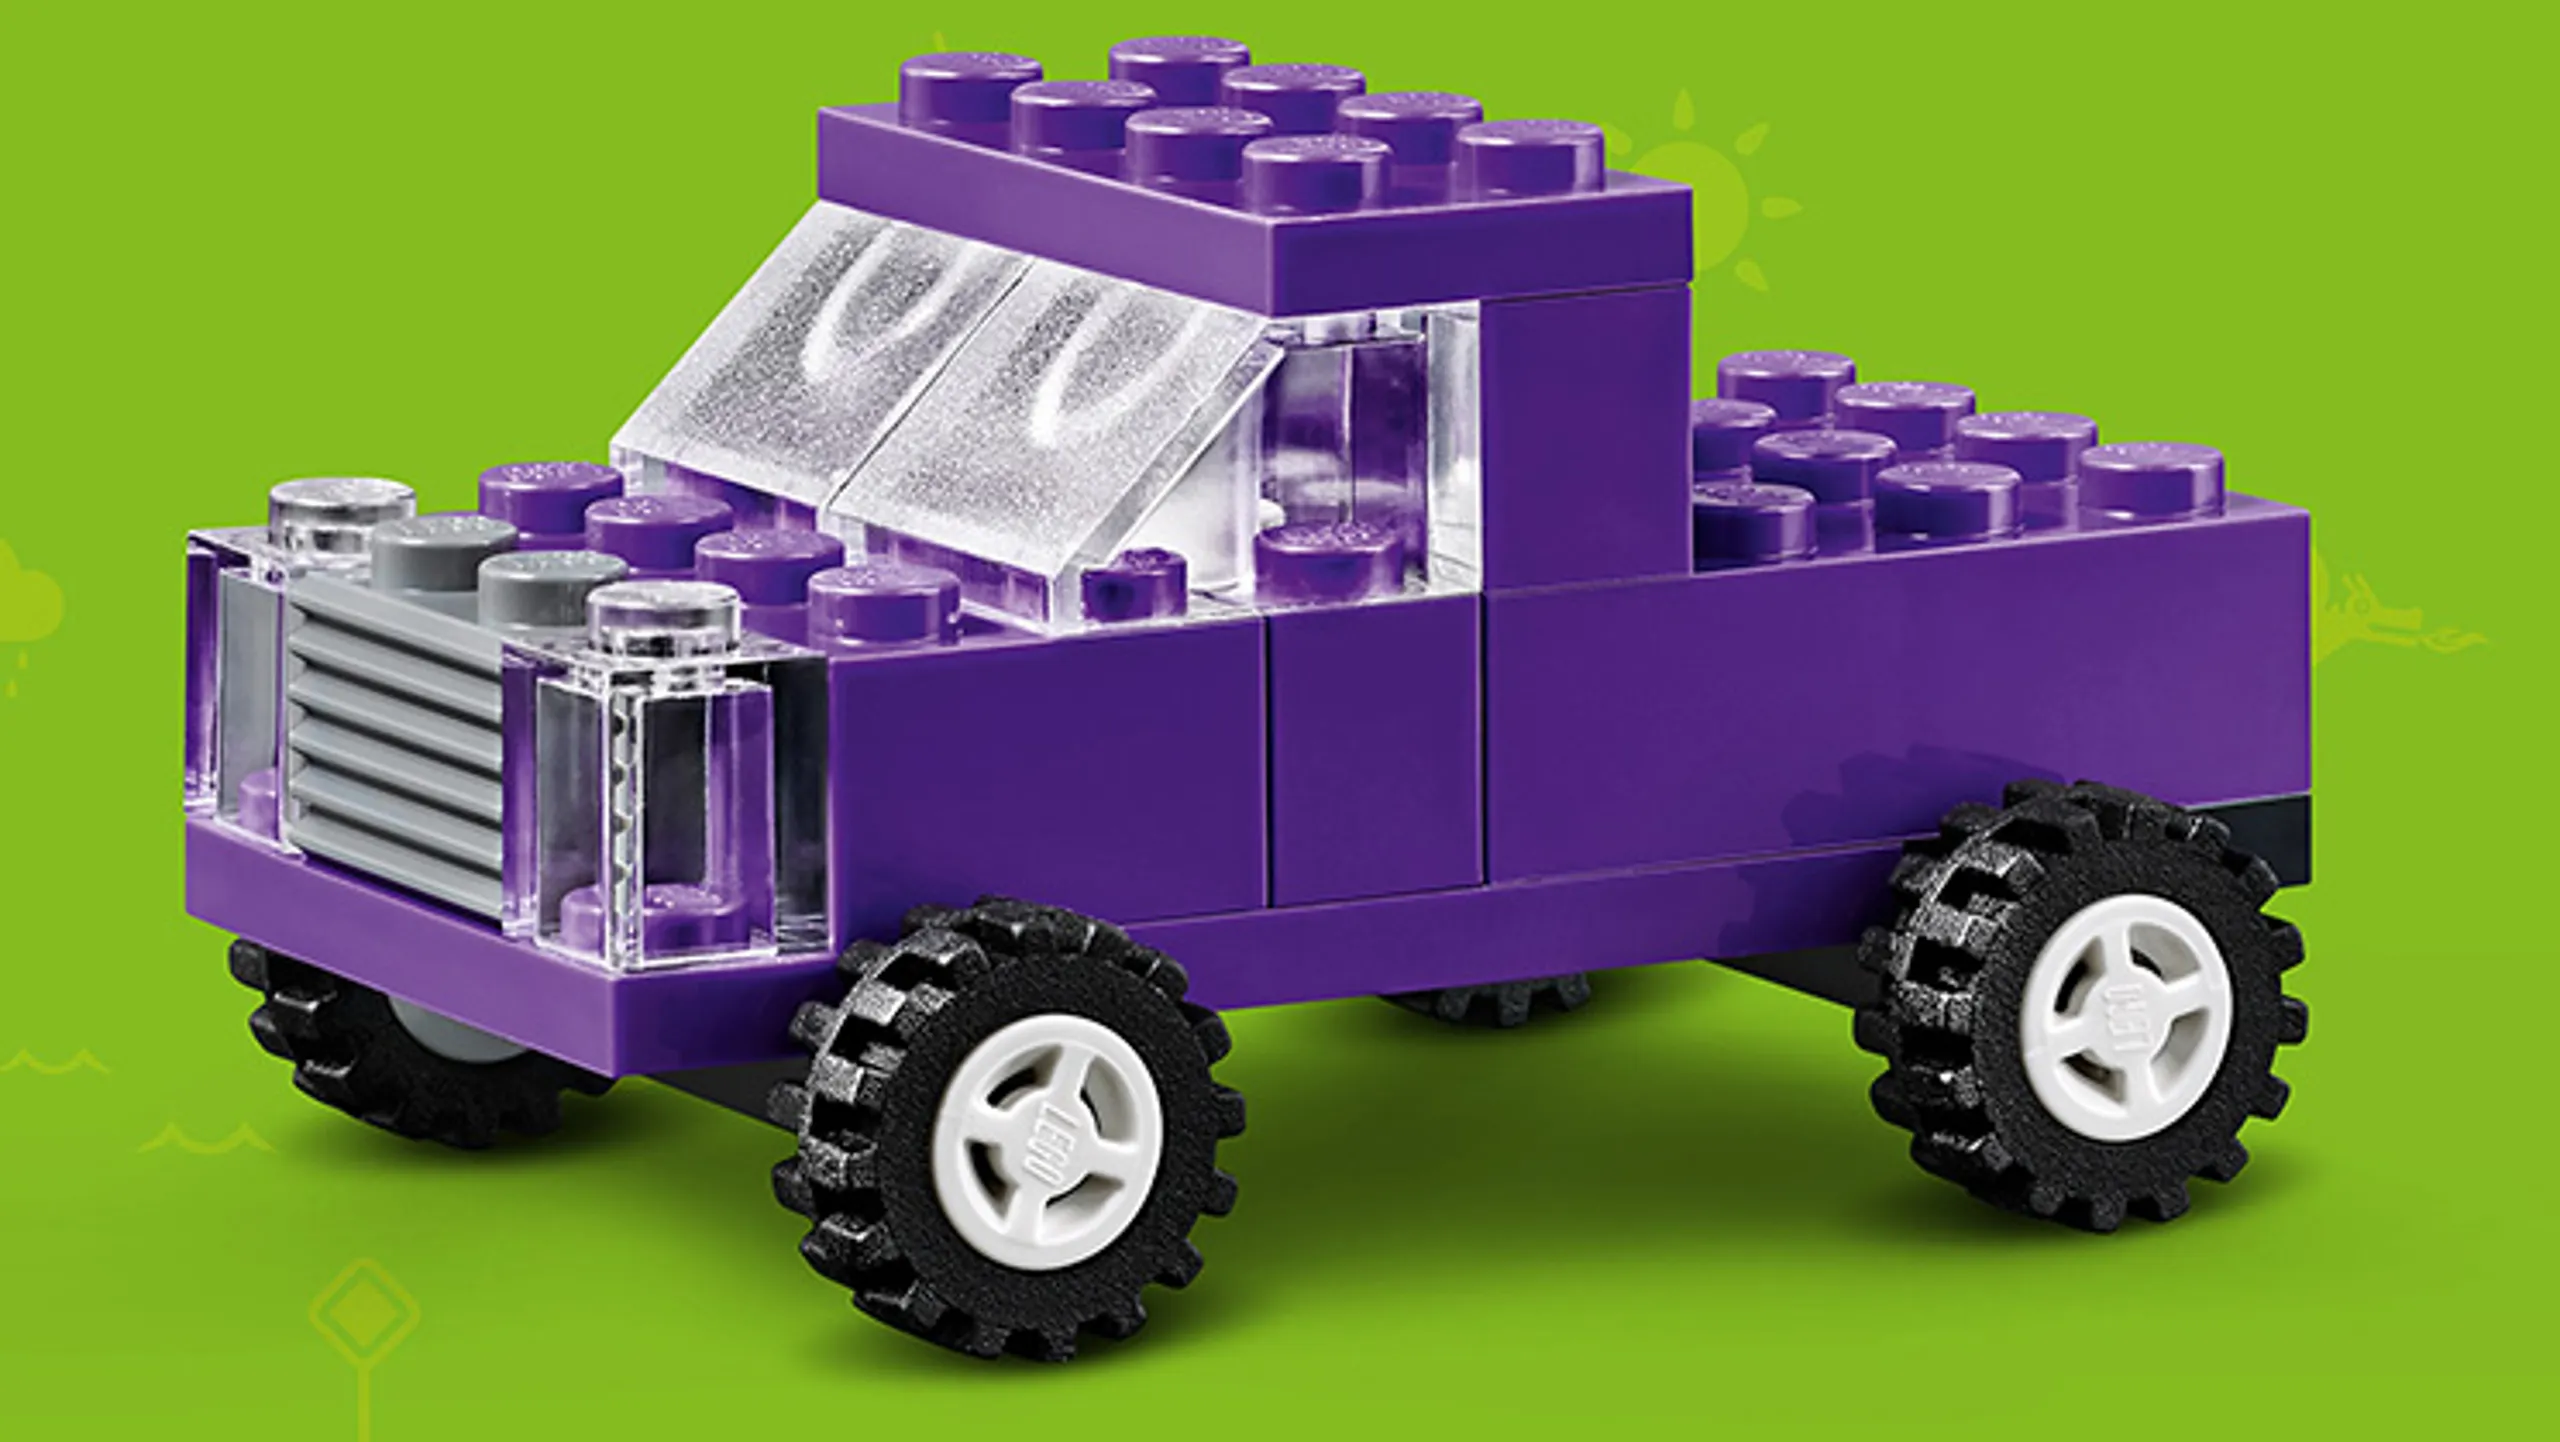 LEGO Classic Bricks Bricks Bricks - 10717 - Build a purple 4x4  pick-up truck with a grey bumper and a large trunk.